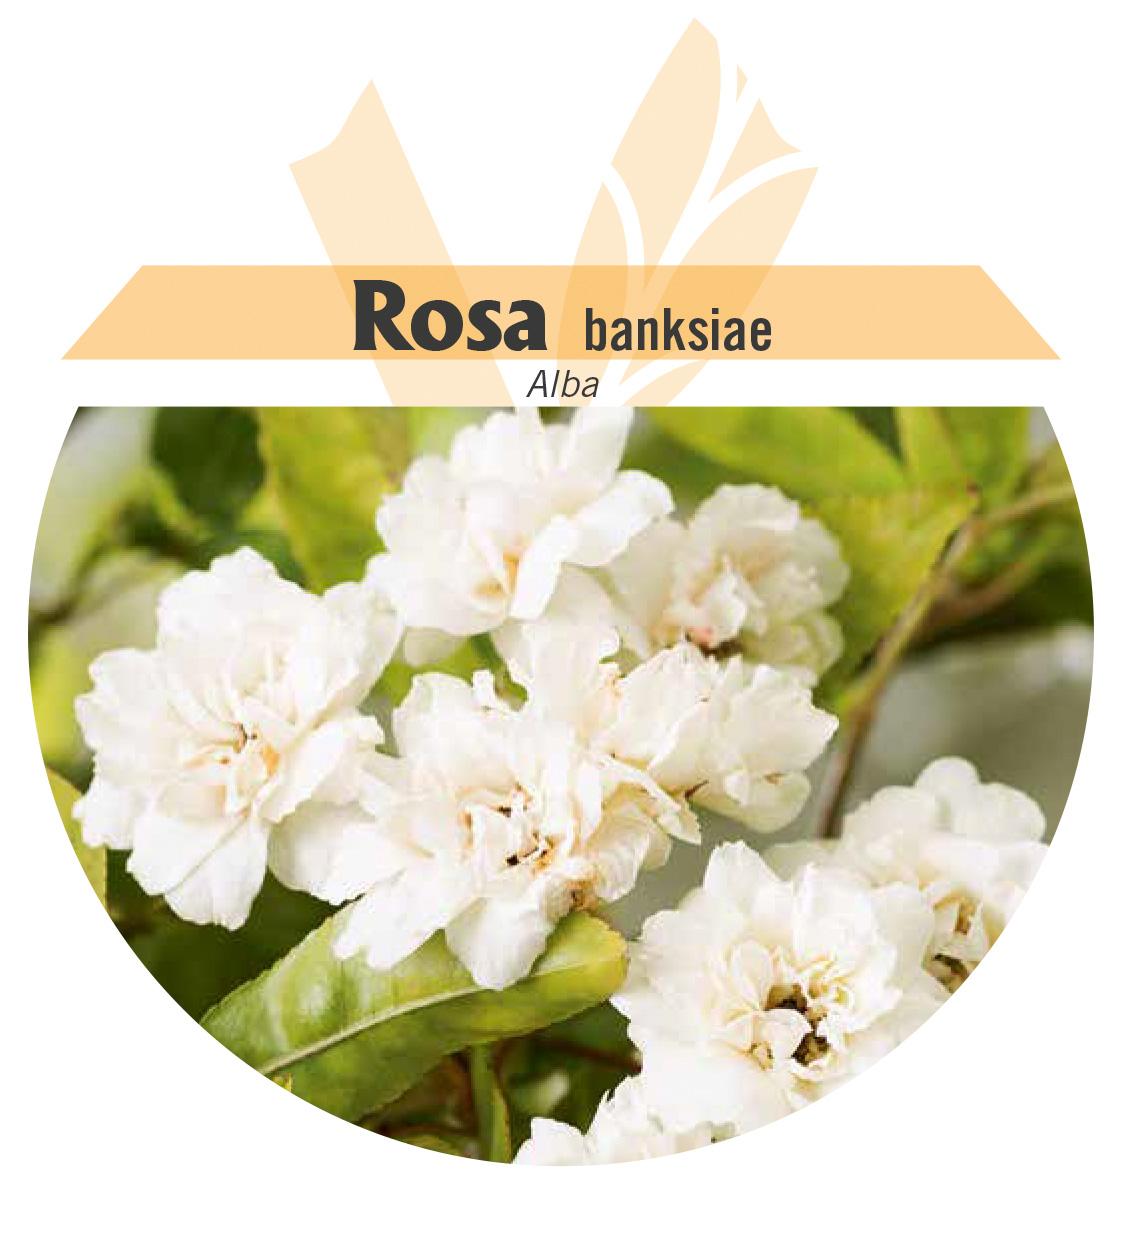 Rosa banksiae